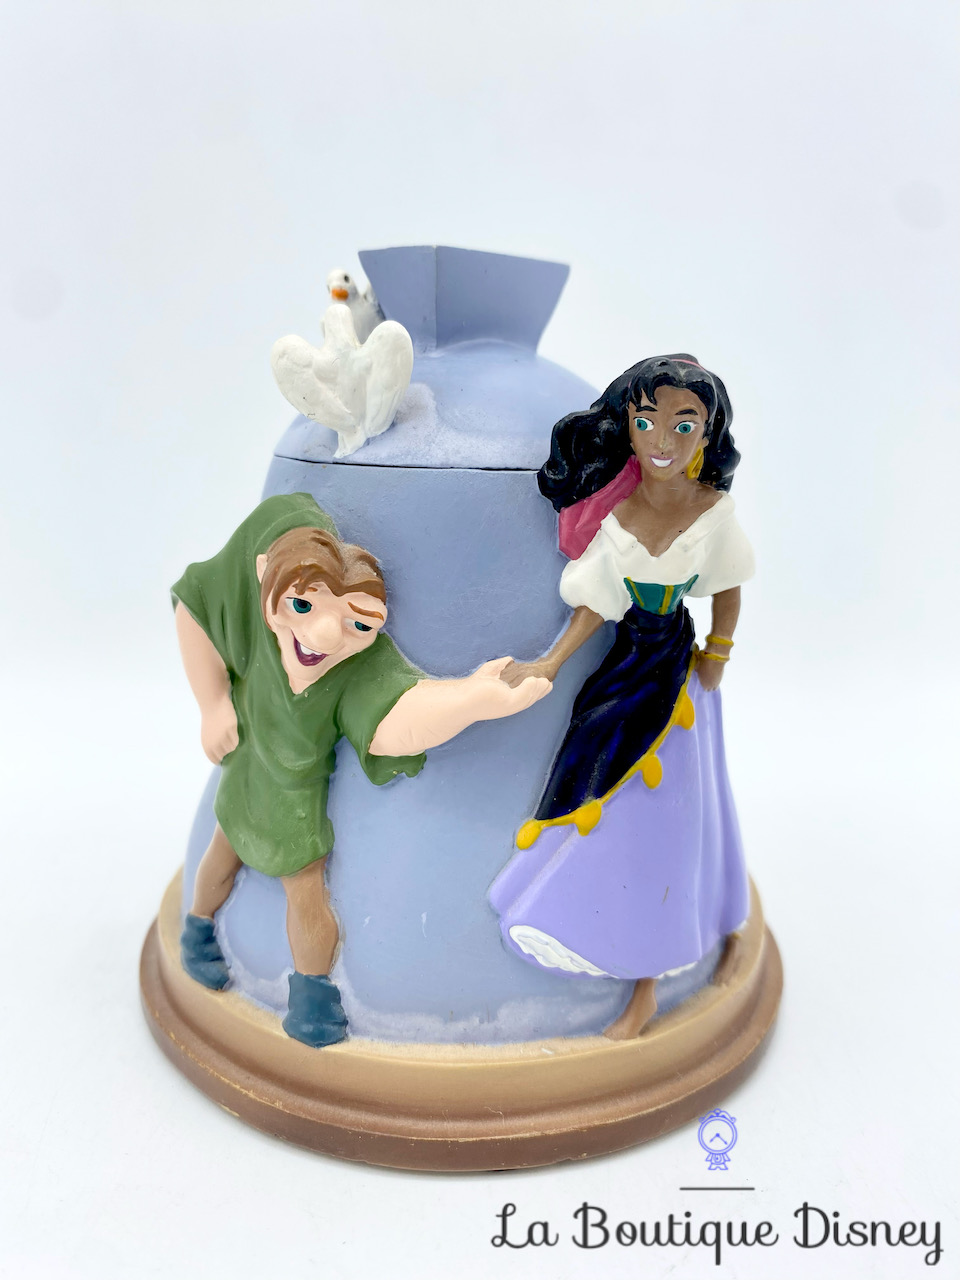 Boite résine Le Bossu de Notre Dame Disney vintage cloche Quasimodo Esmeralda